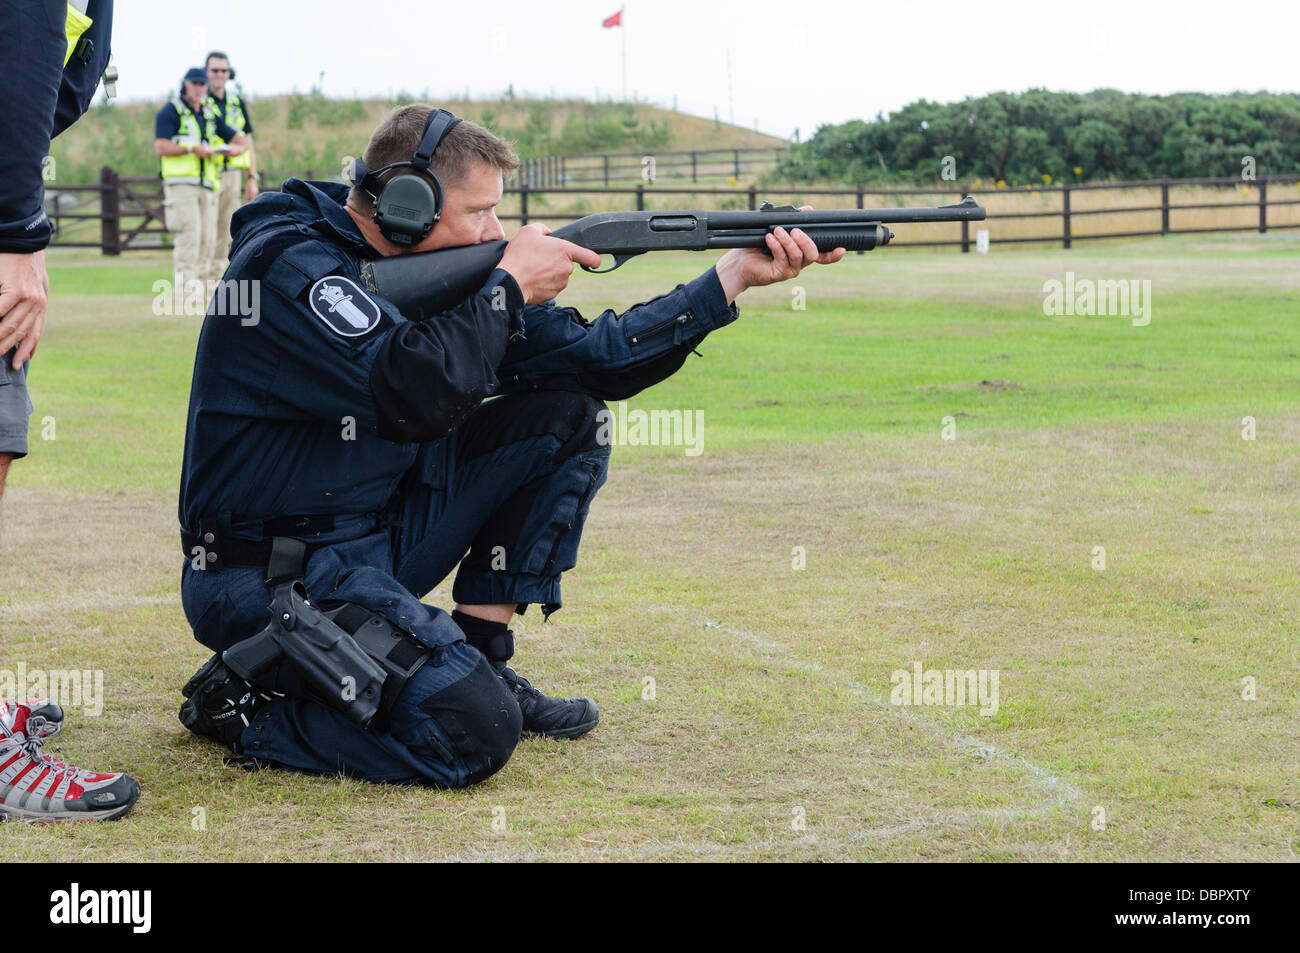 Ballykinlar, Northern Ireland. 2nd August 2013 - A Finnish police officer fires a pump-action shotgun at a firing range Stock Photo